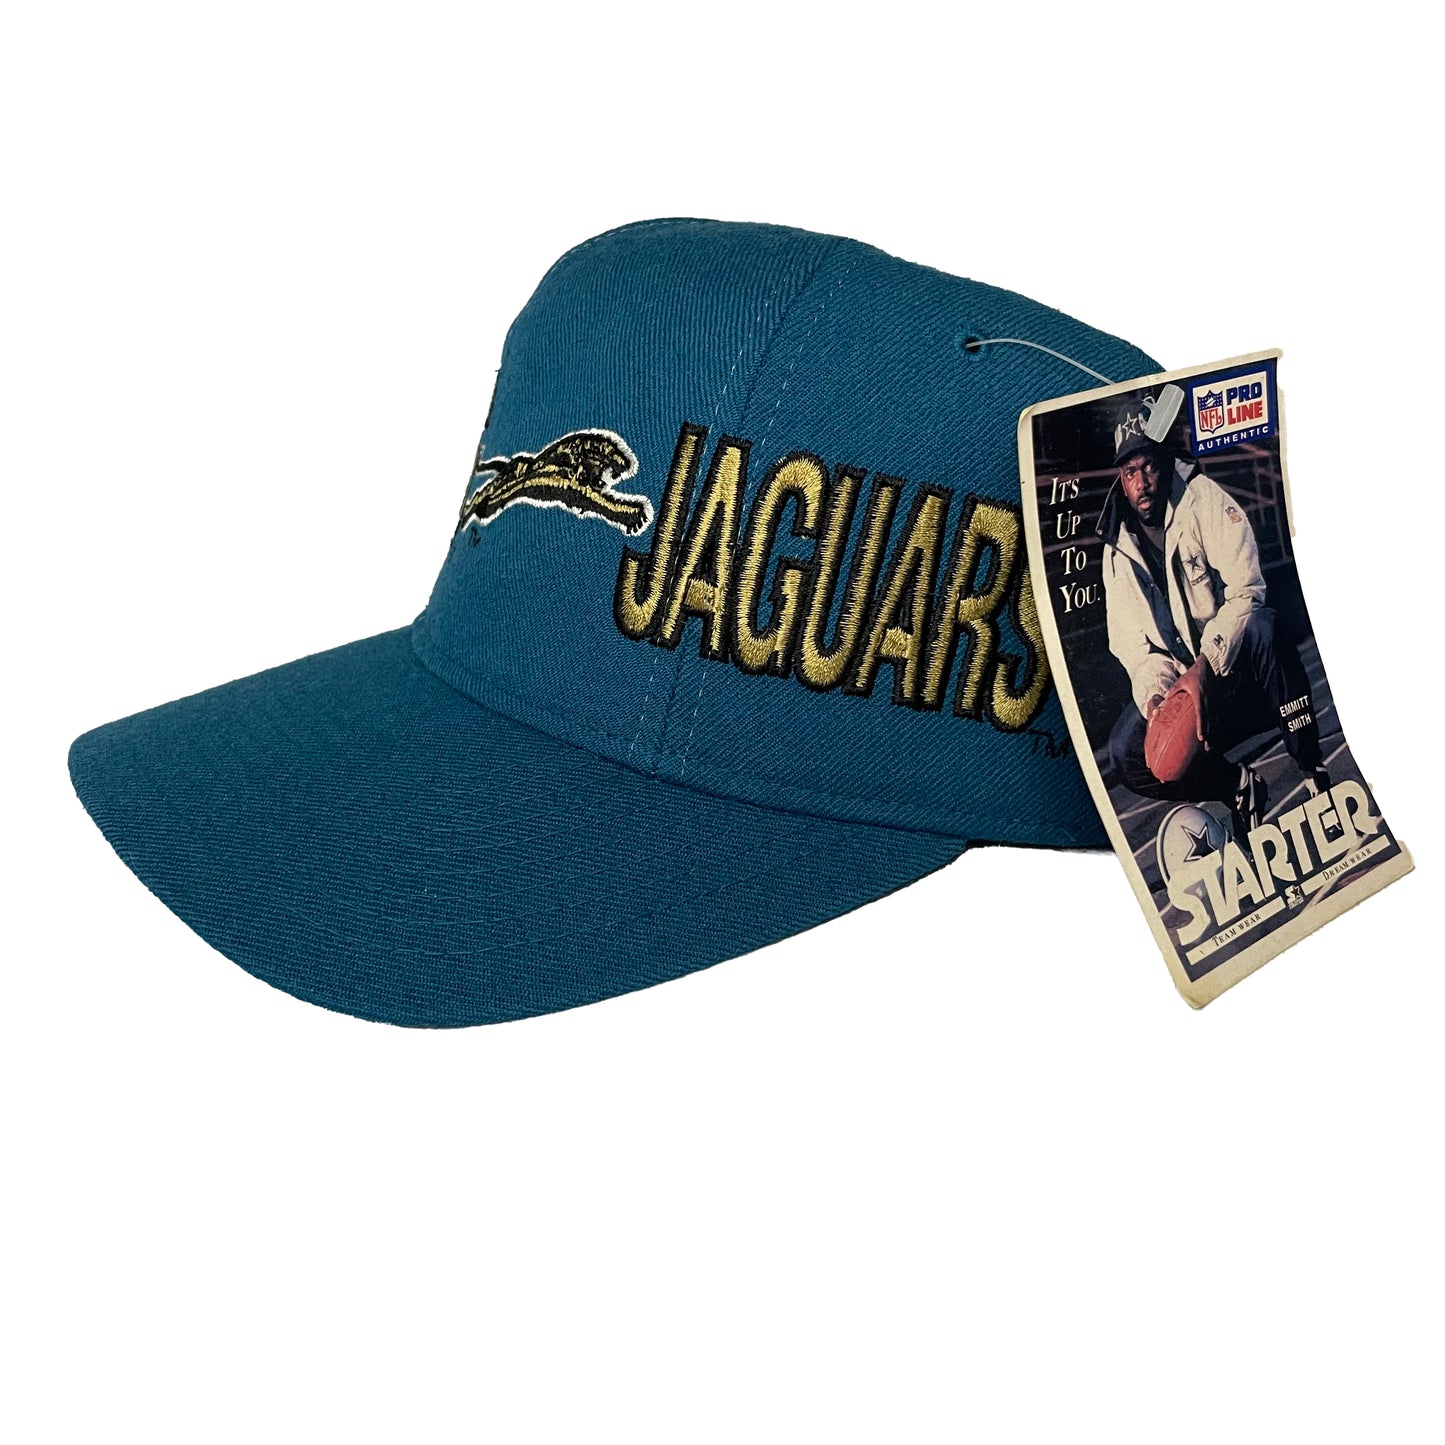 Jacksonville Jaguars banned logo DEADSTOCK hat